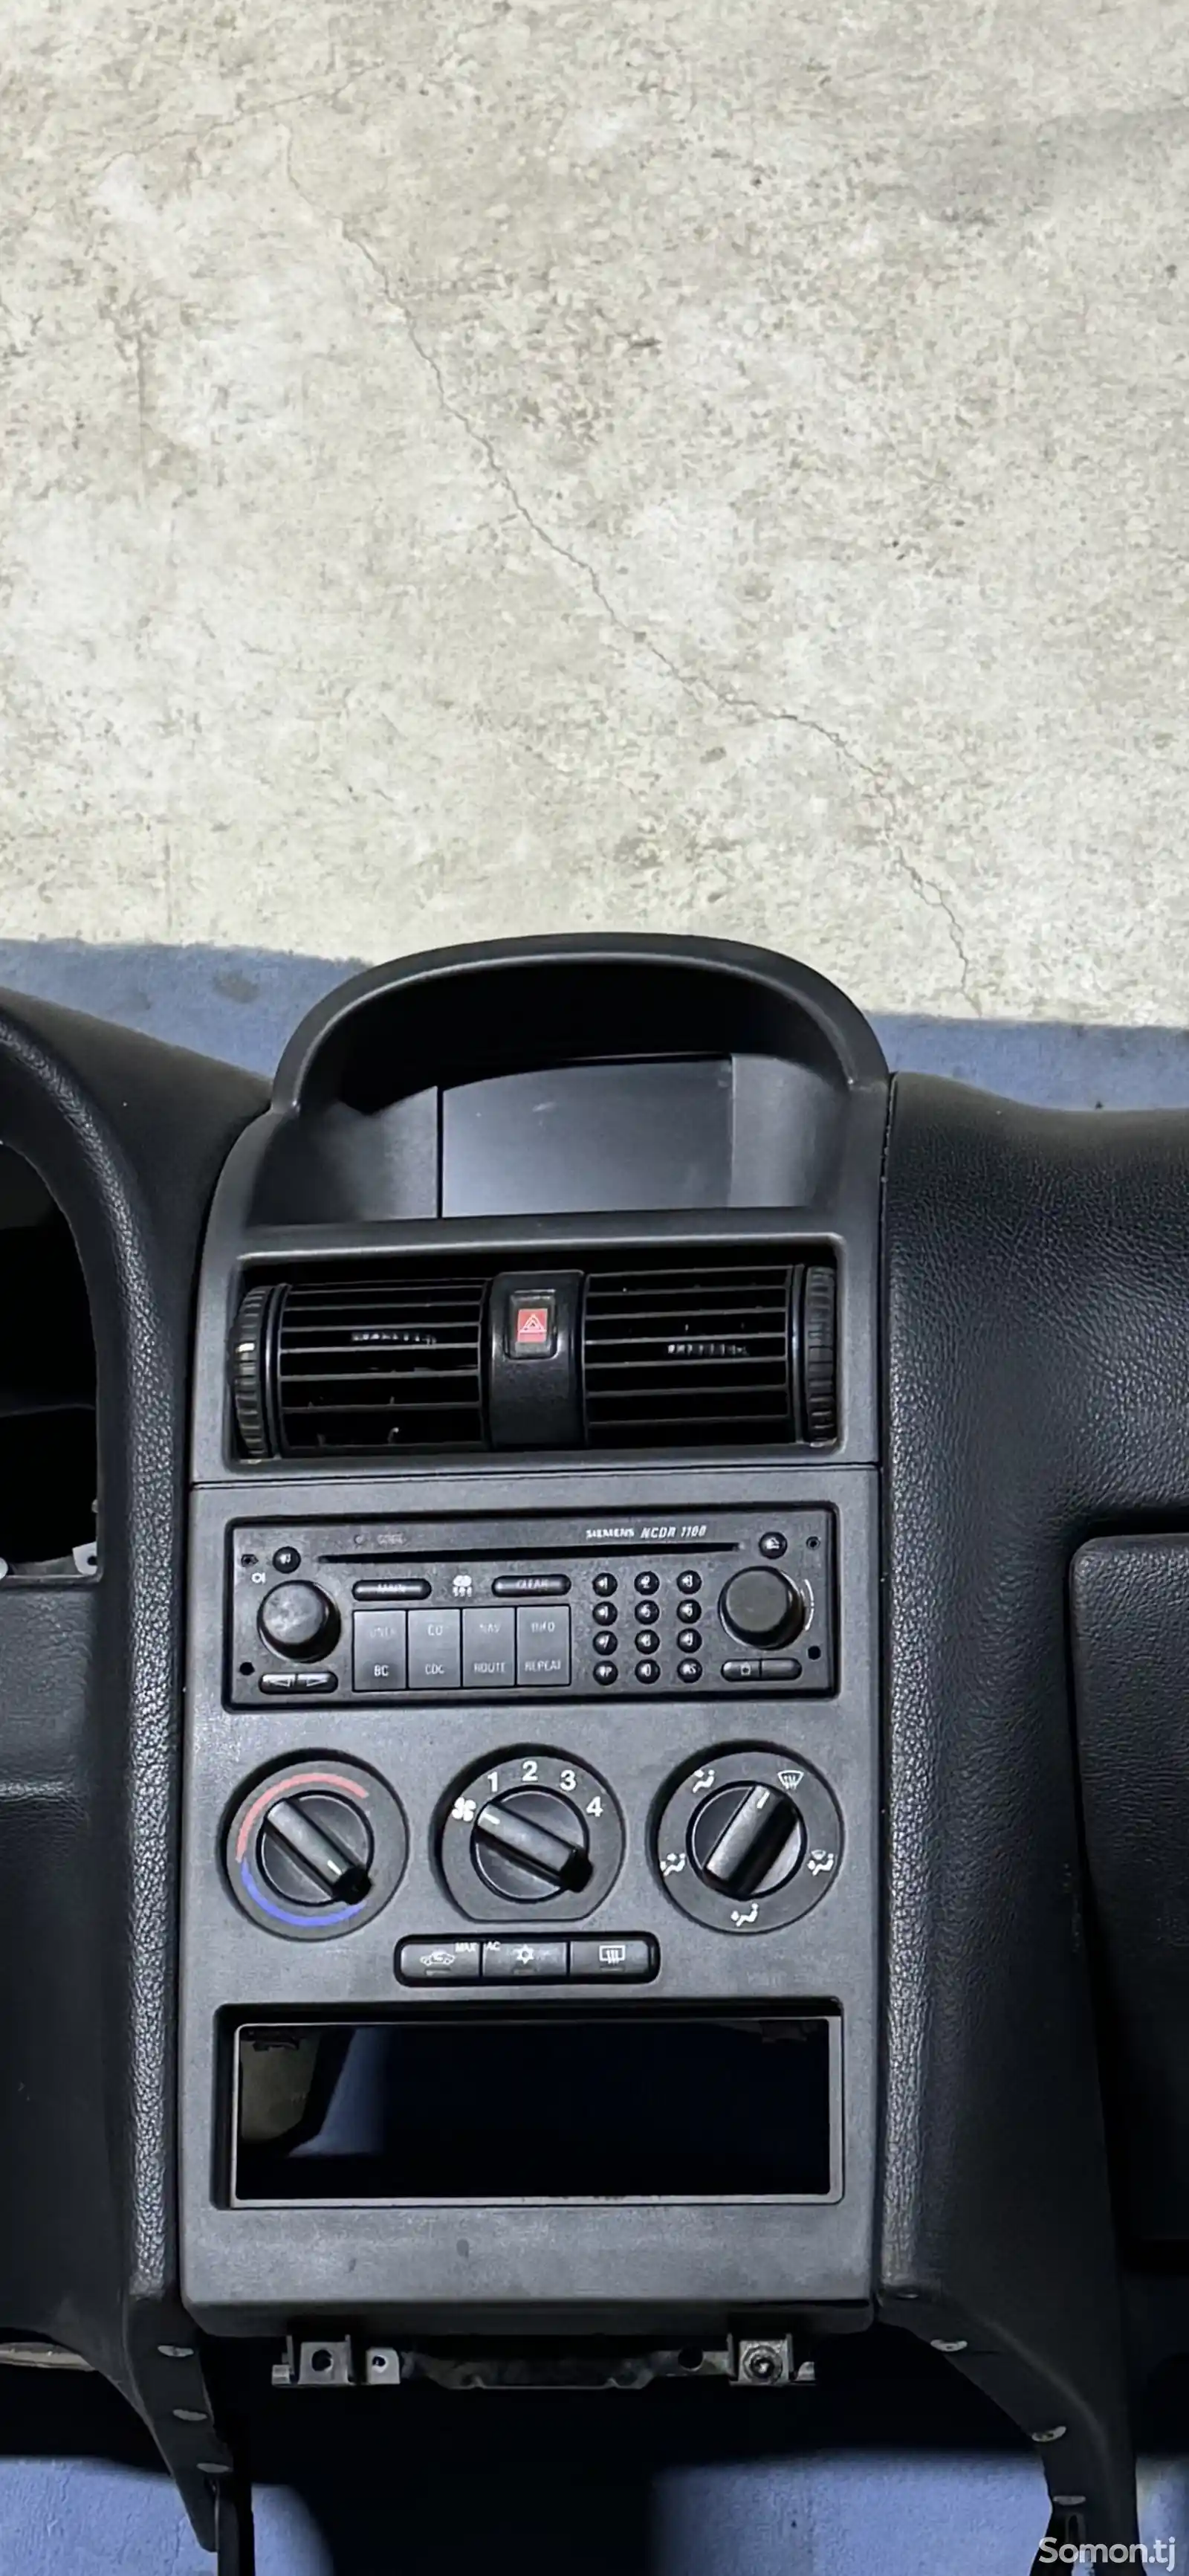 Рамка и цветной монитор от Opel Astra G